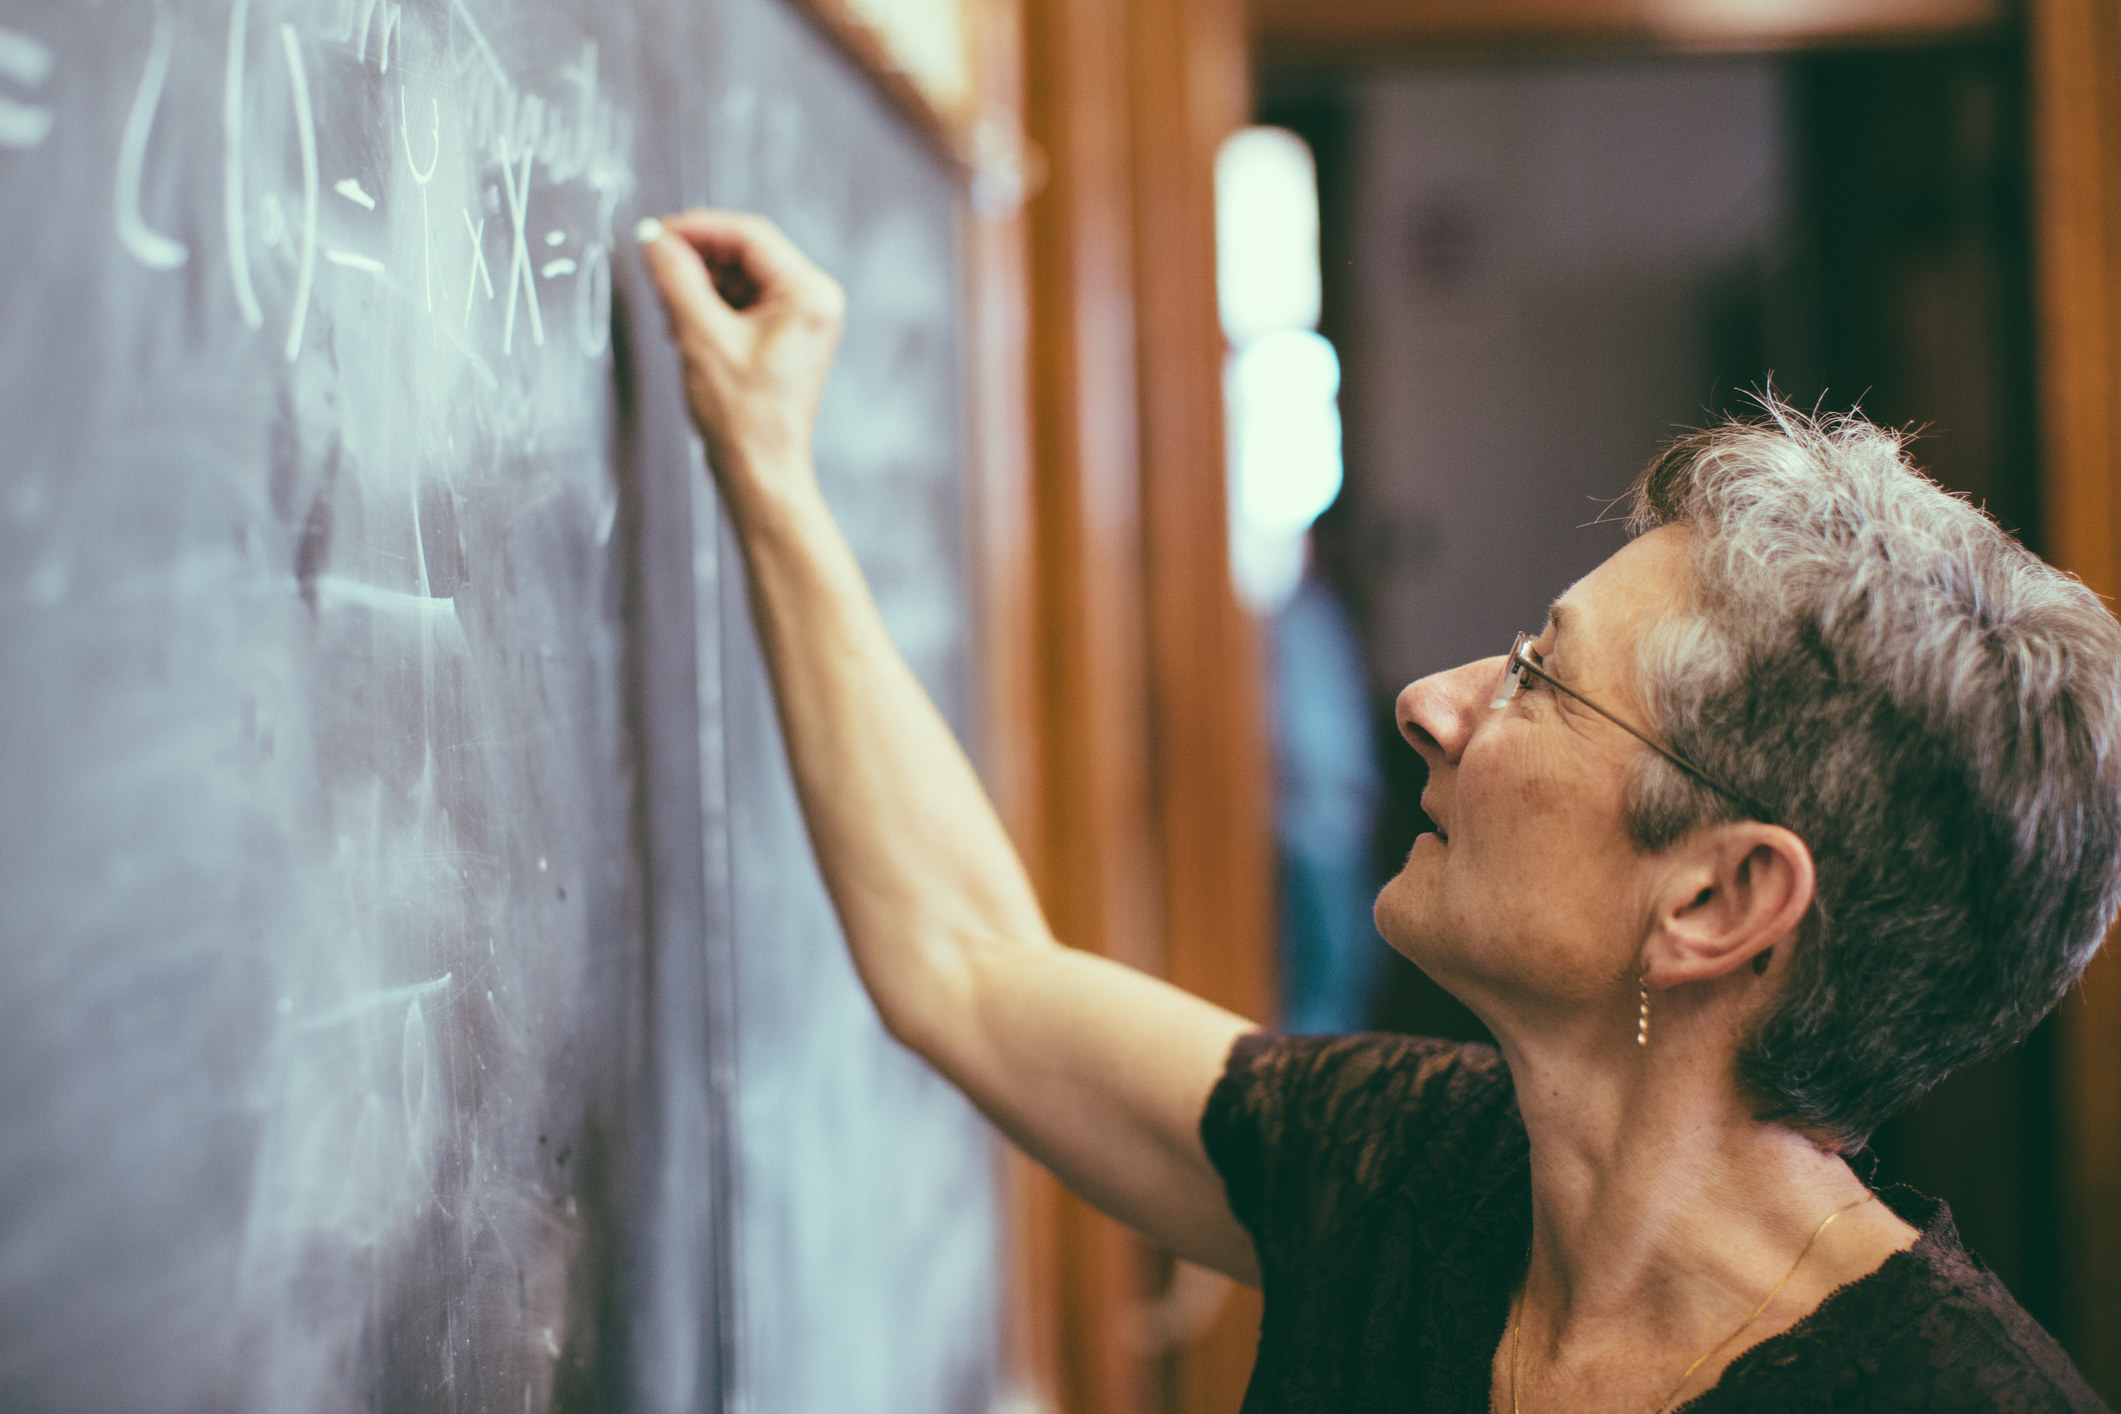 Teacher works on a math problem on the classroom chalkboard